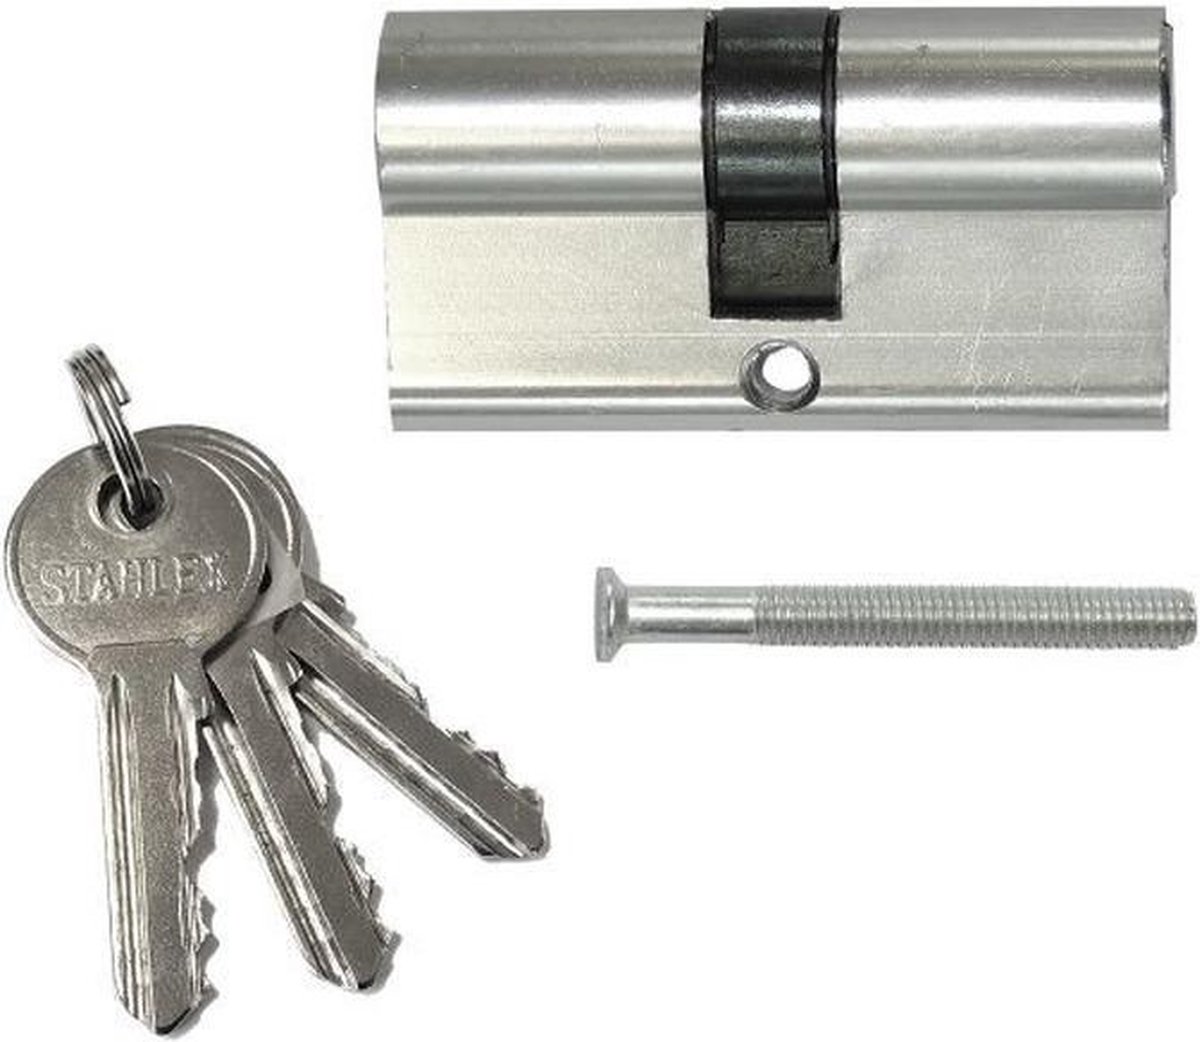 Cilinder deurslot inclusief 3 sleutels - Cilinderslot - Euro profiel cilinder slot